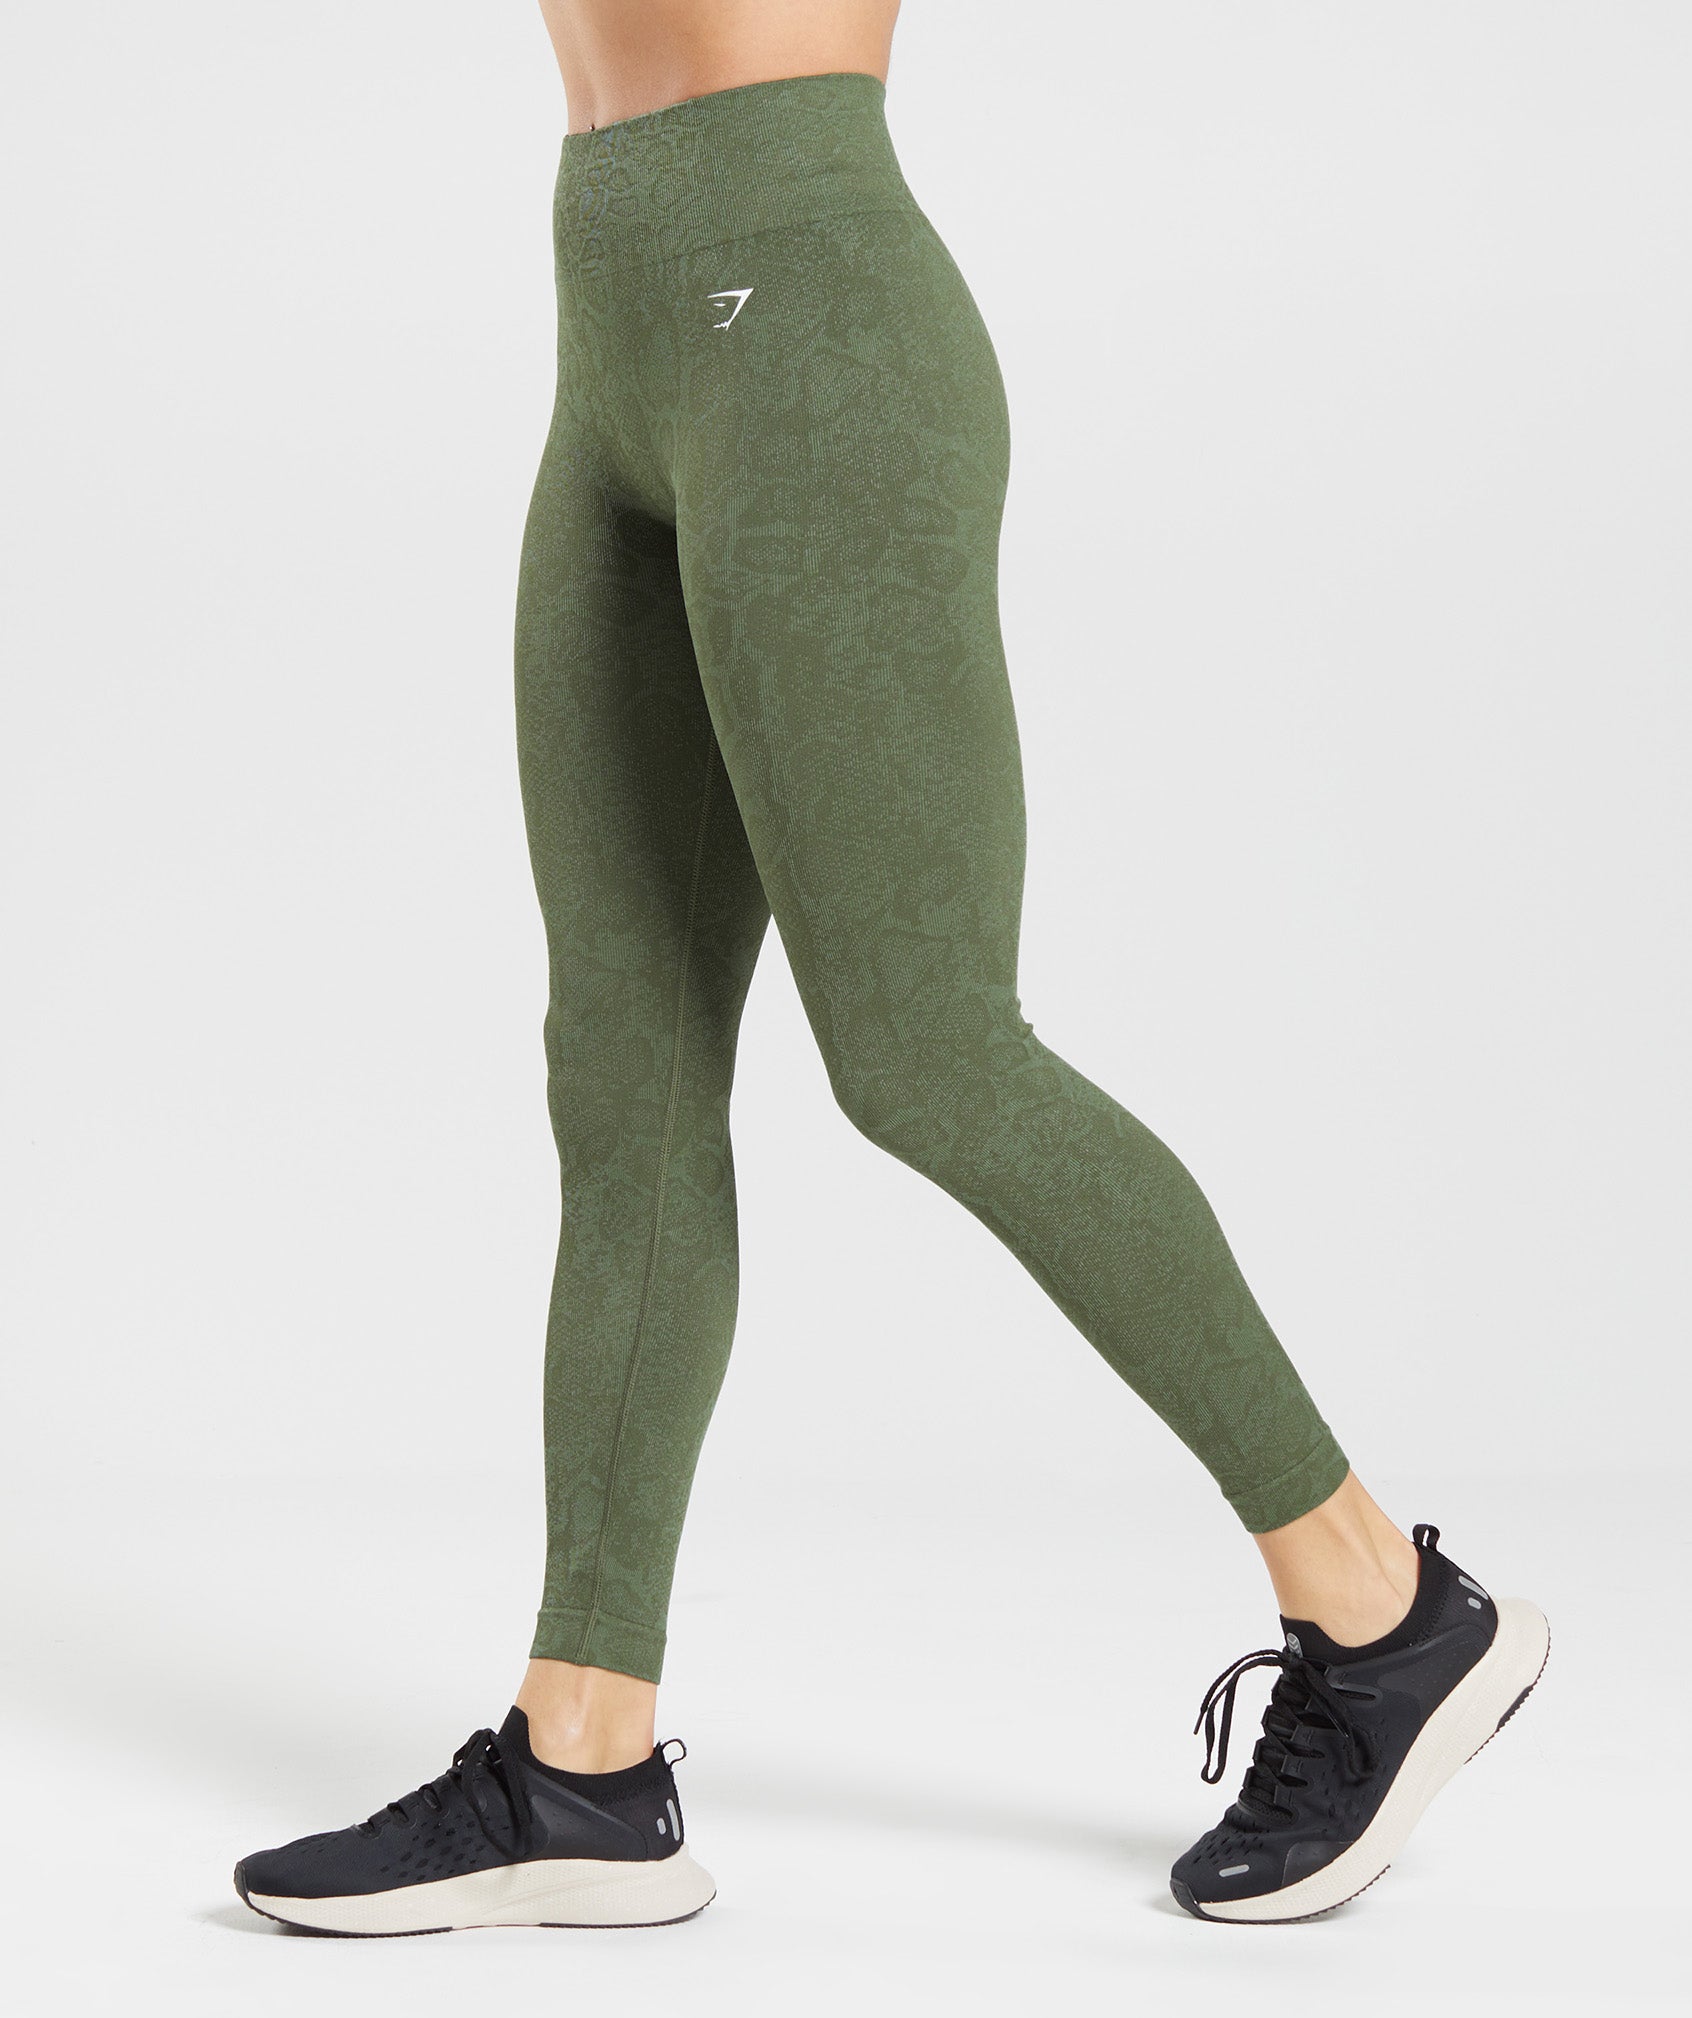 CLS Sportswear Activewear Camouflage Green Crop Leggings Scrunch Bum Size M  UK10